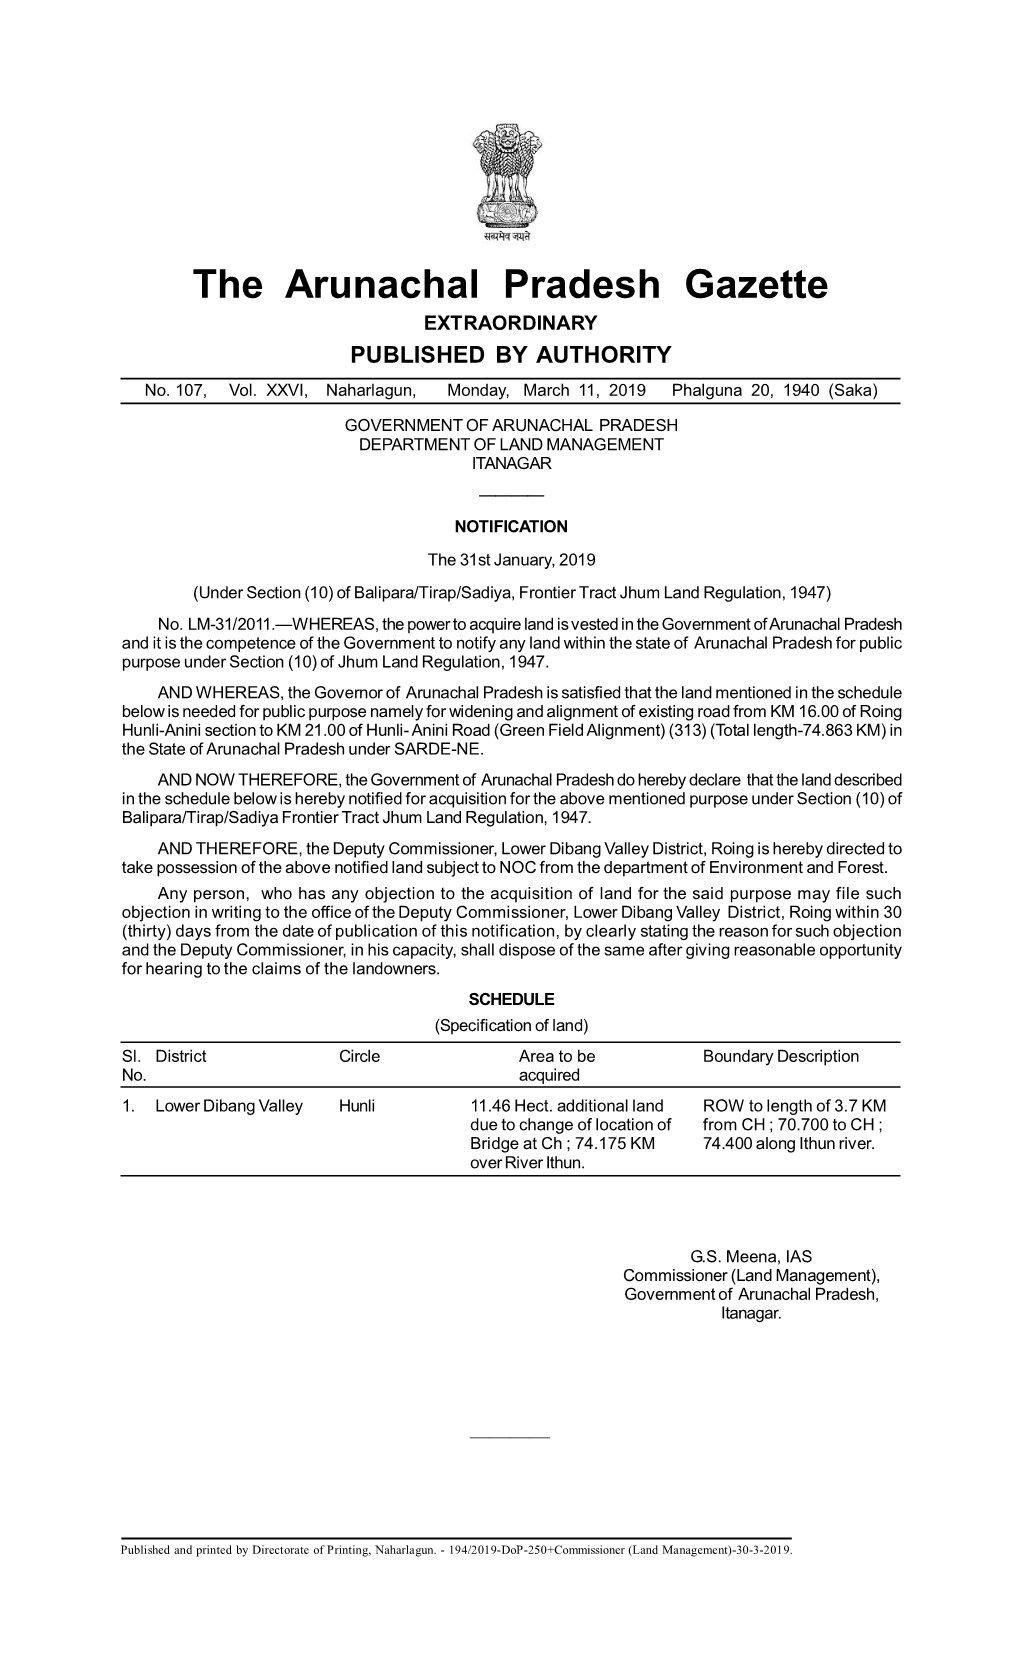 The Arunachal Pradesh Gazette EXTRAORDINARY PUBLISHED by AUTHORITY No